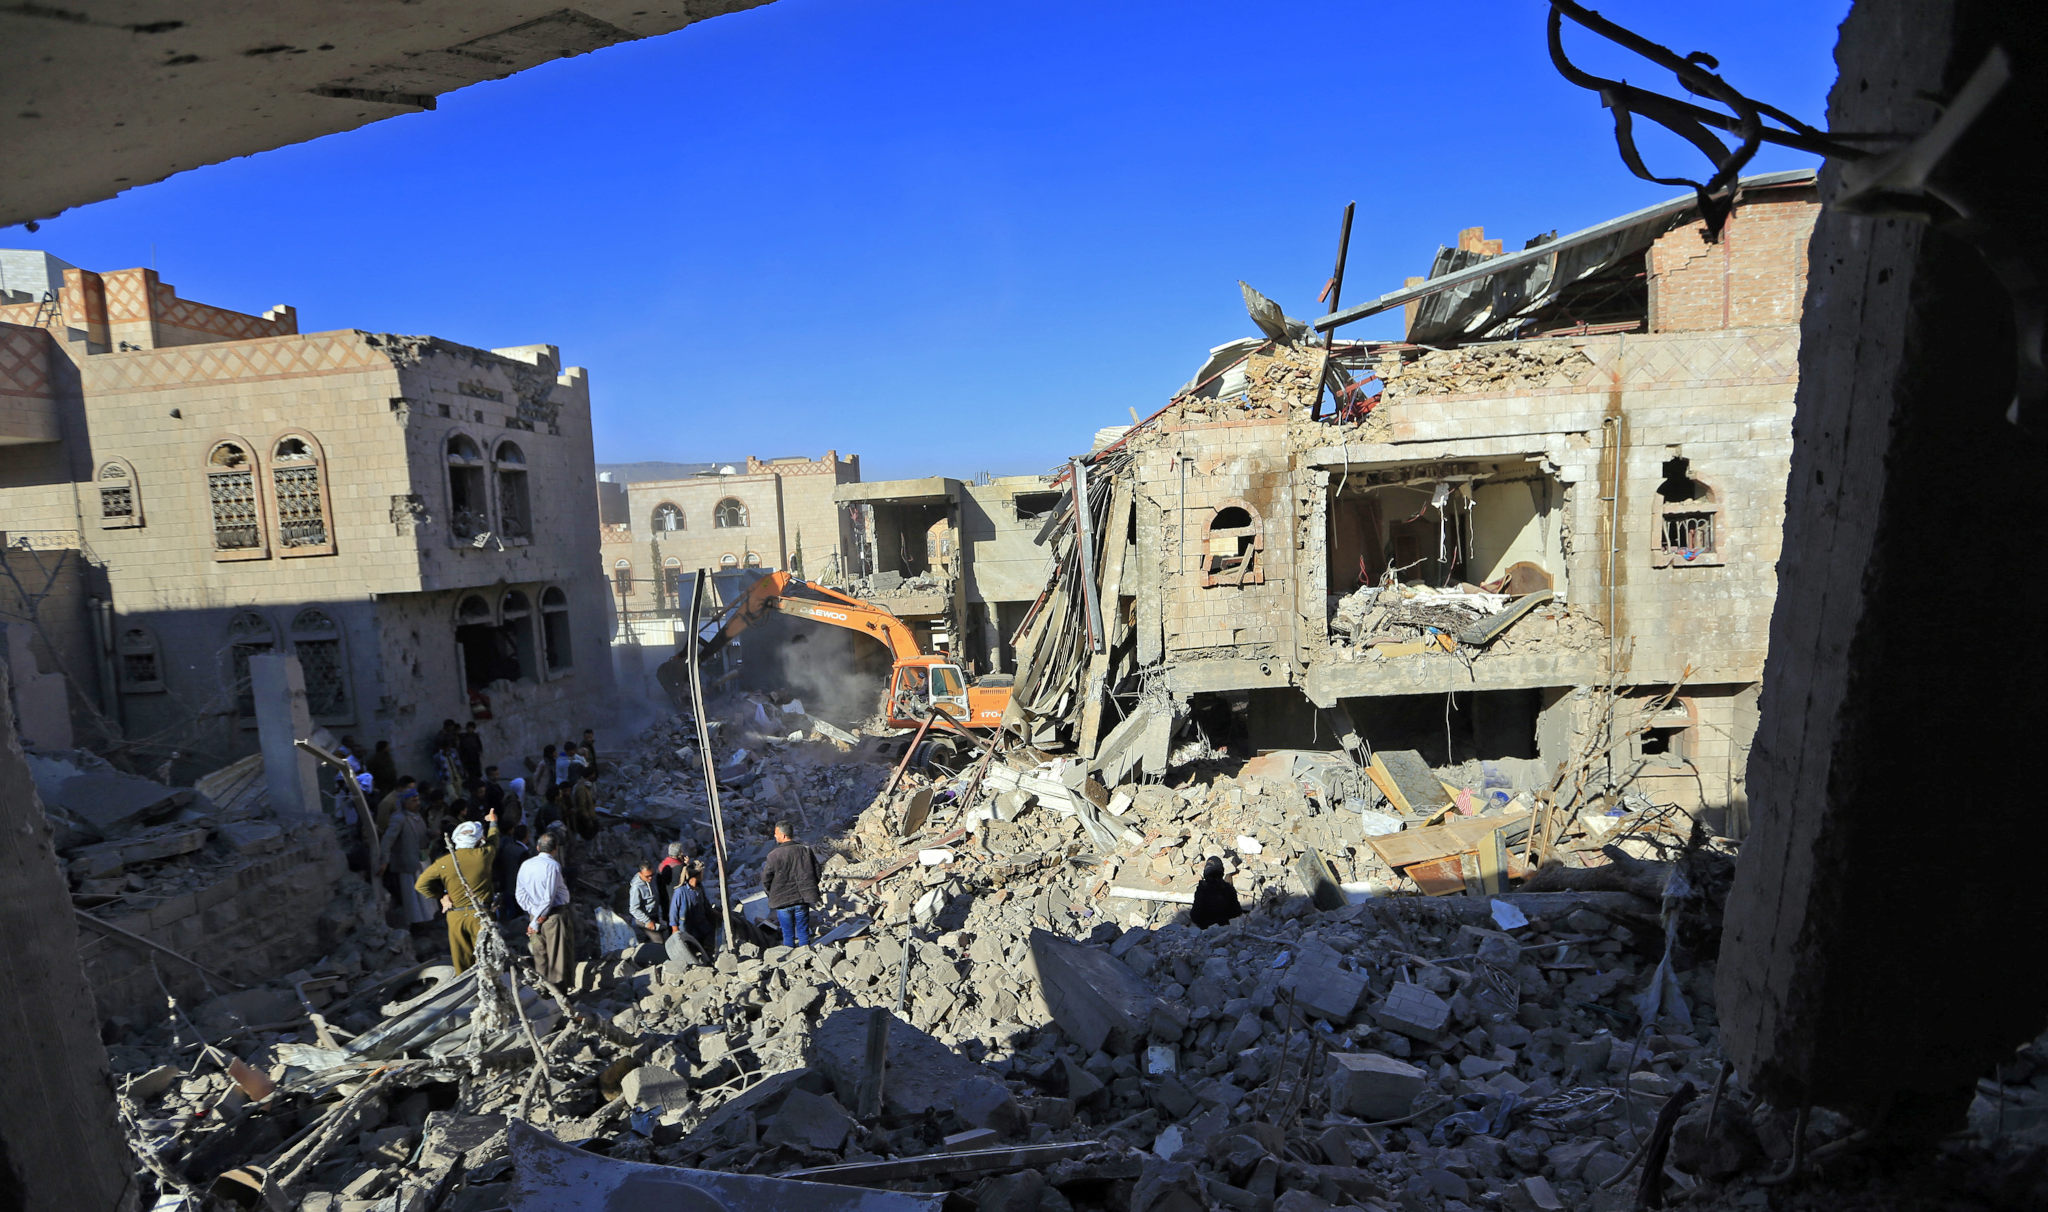 Aftermath of a Saudi-led air strike on Yemen’s capital Sanaa, 18 January 2022. (Photo: Mohammed Huwais / AFP via Getty)